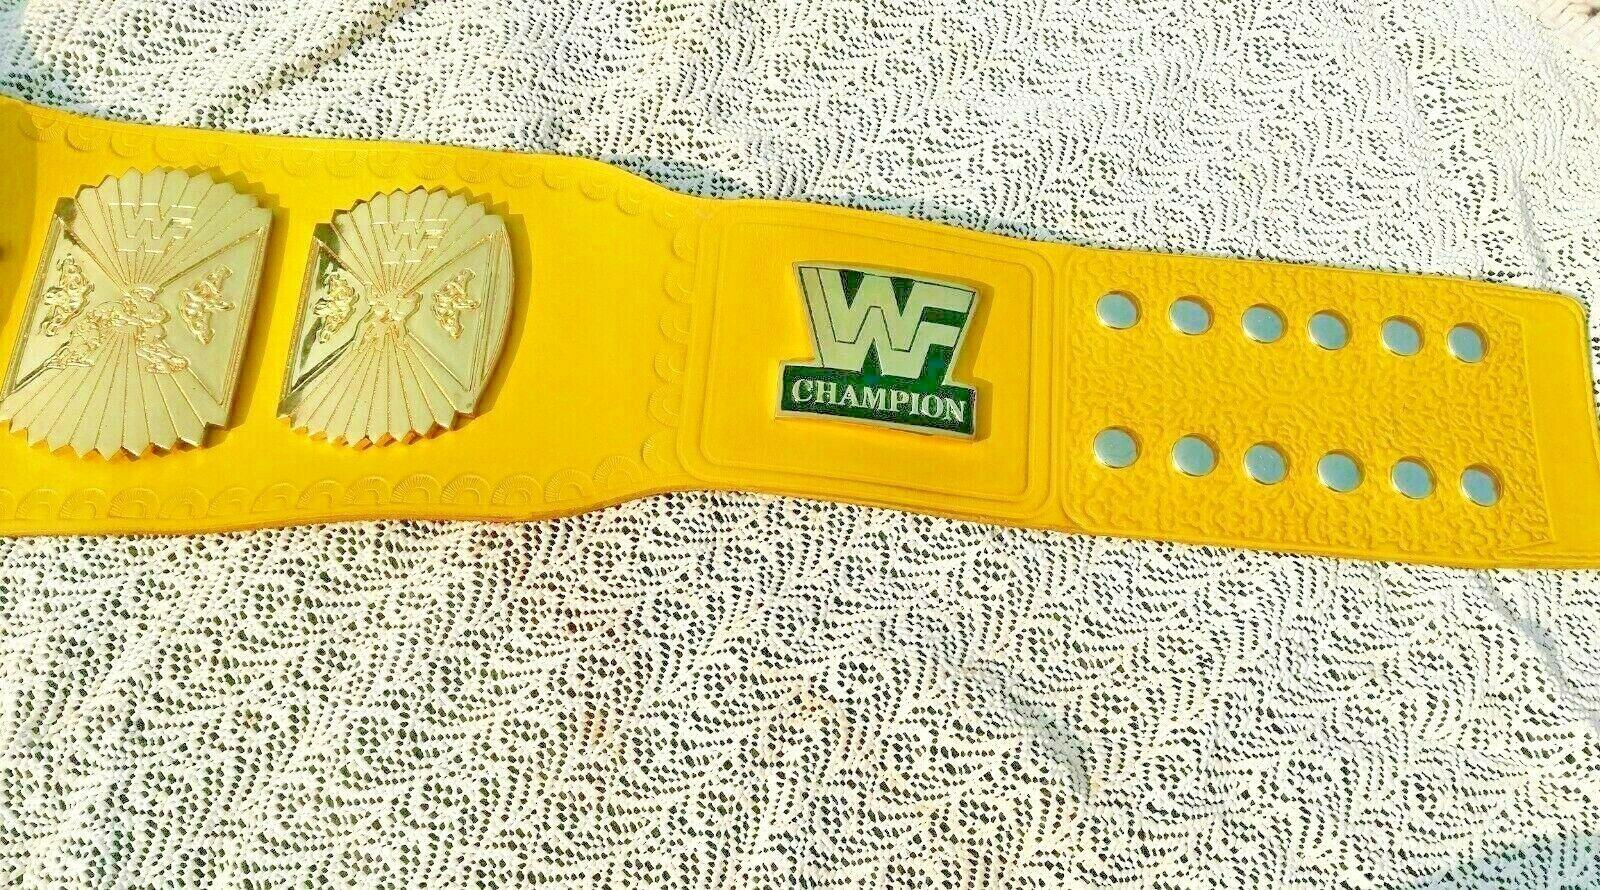 WWF WINGED EAGLE ULTIMATE WARRIOR Zinc Championship Belt - Zees Belts